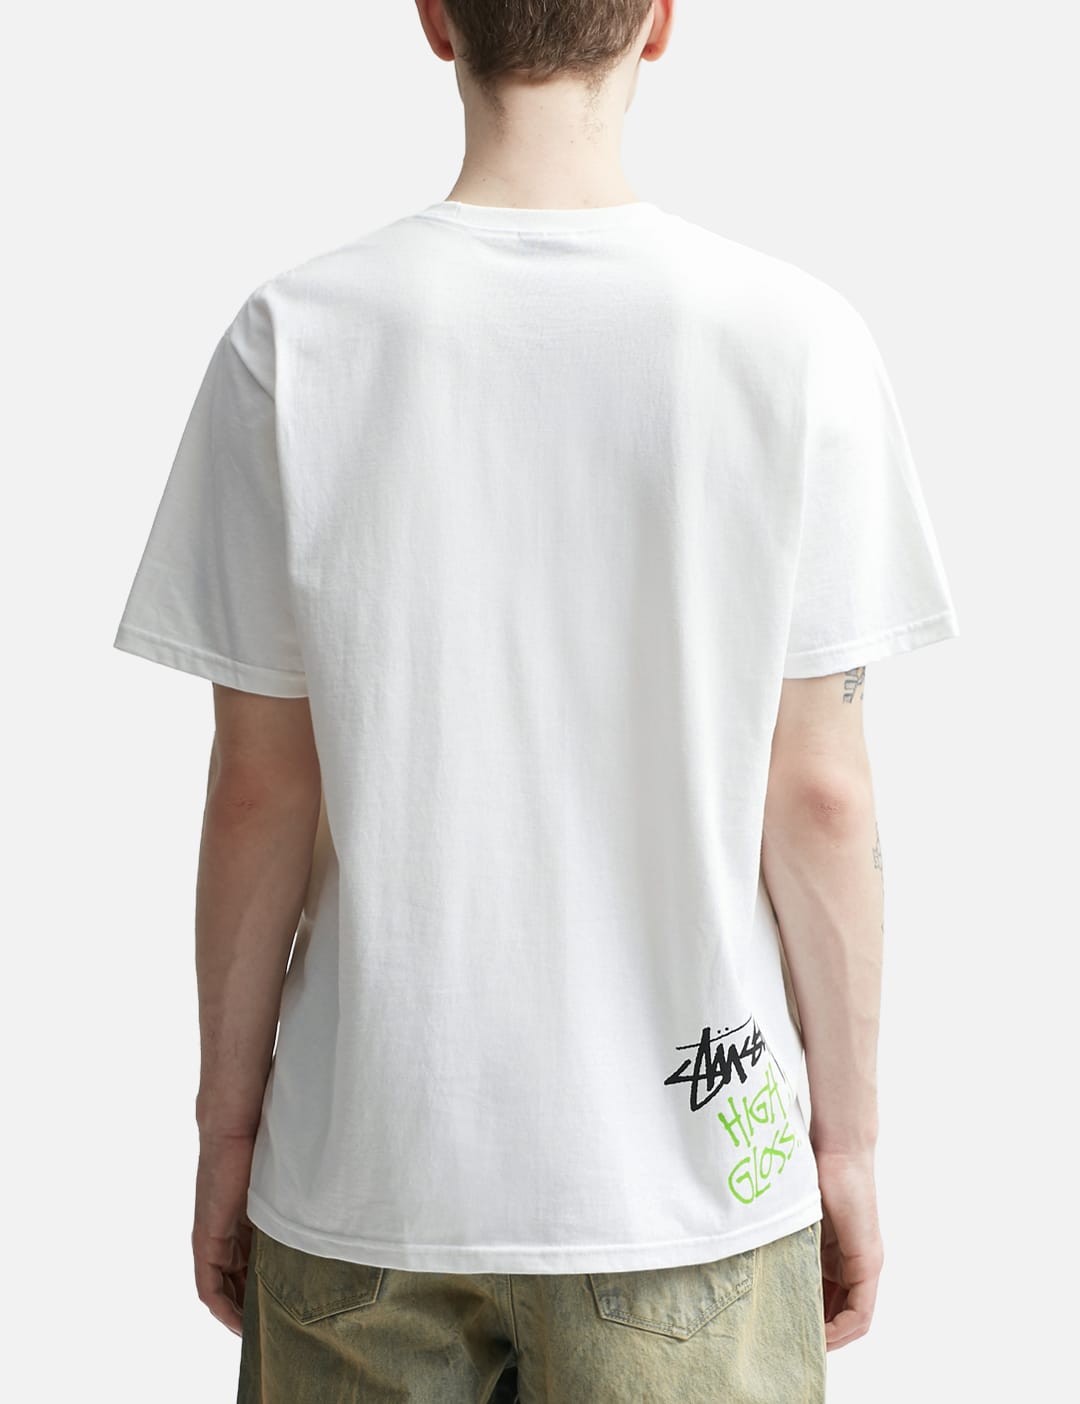 Stüssy - Spray Can T-shirt | HBX - HYPEBEAST 為您搜羅全球潮流時尚品牌